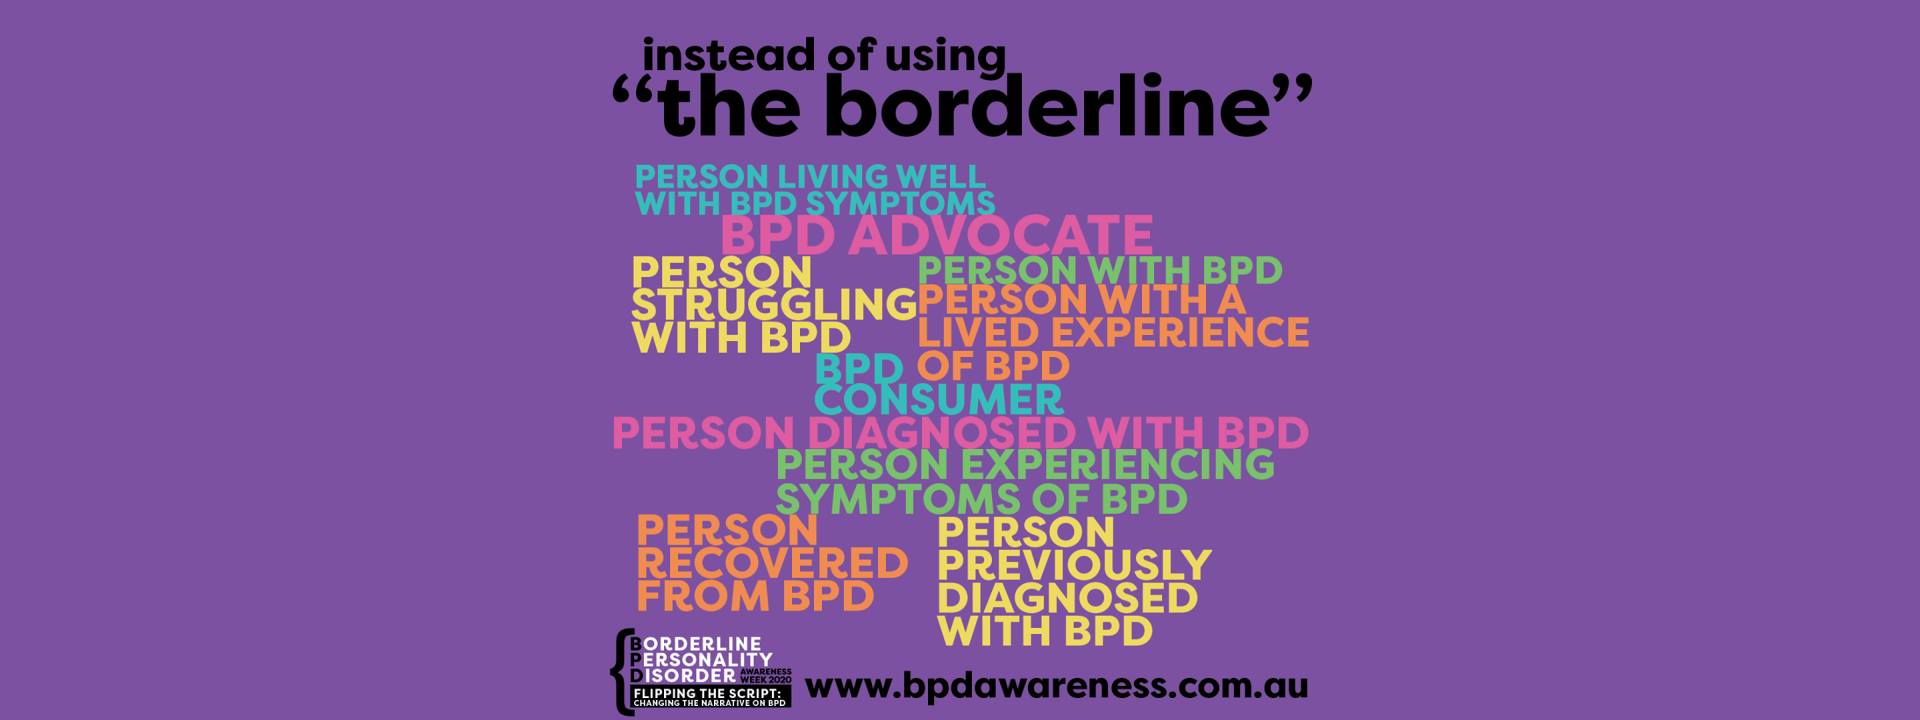 BPD Awareness Week - Not Borderline